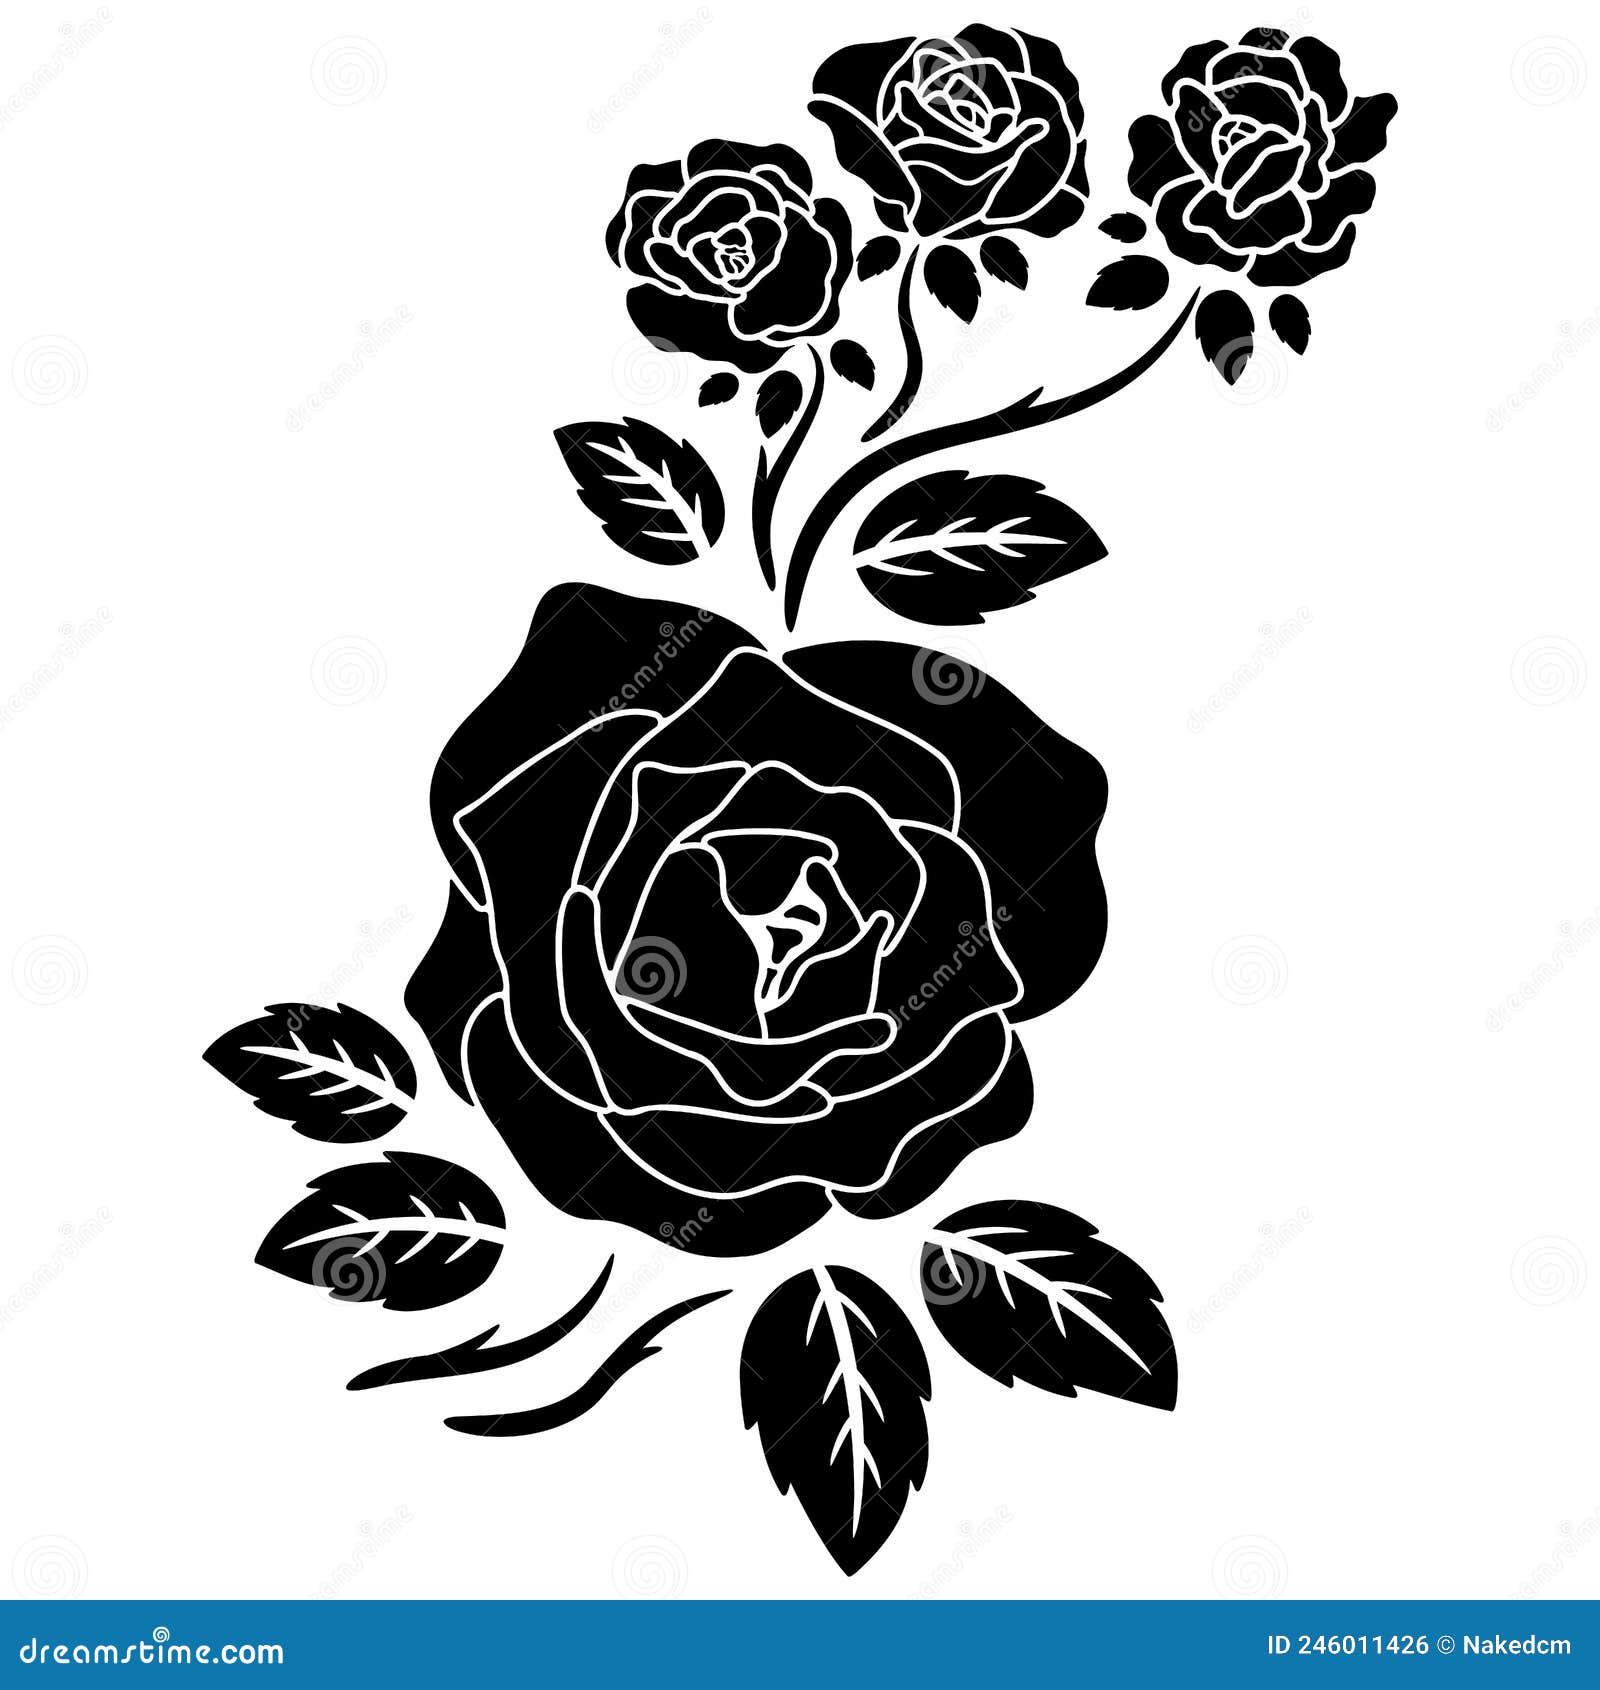 Silhouette Black Rose Flower Decoration Stock Vector - Illustration of ...